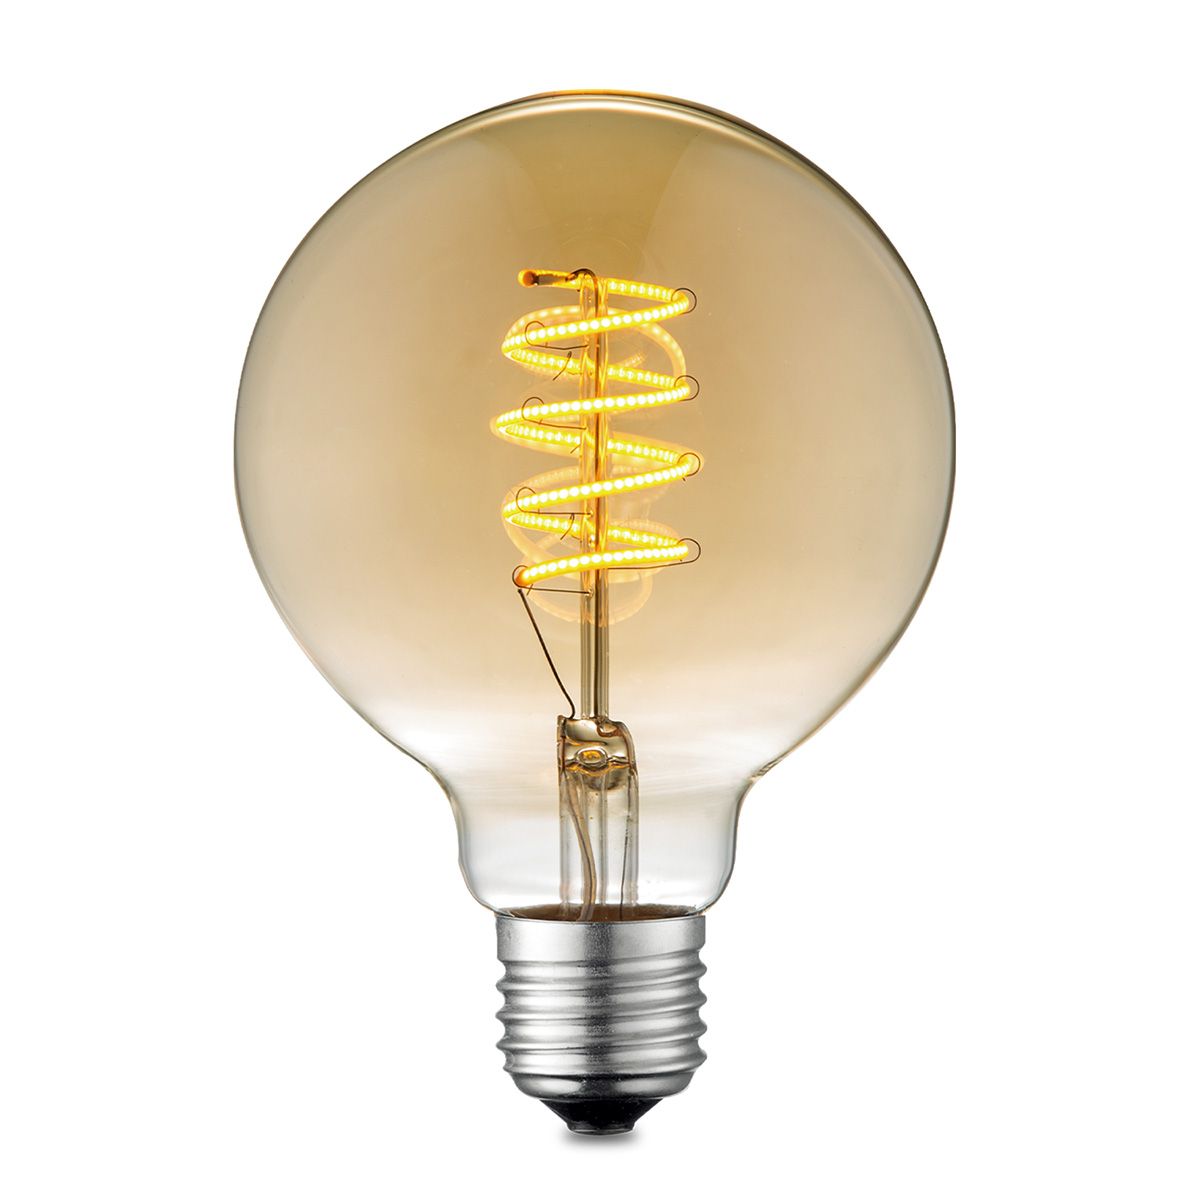 Koop Light depot - LED lamp Spiral G95 4W dimbaar - amber - Outlet met de hoogste korting bij Light Outlet!